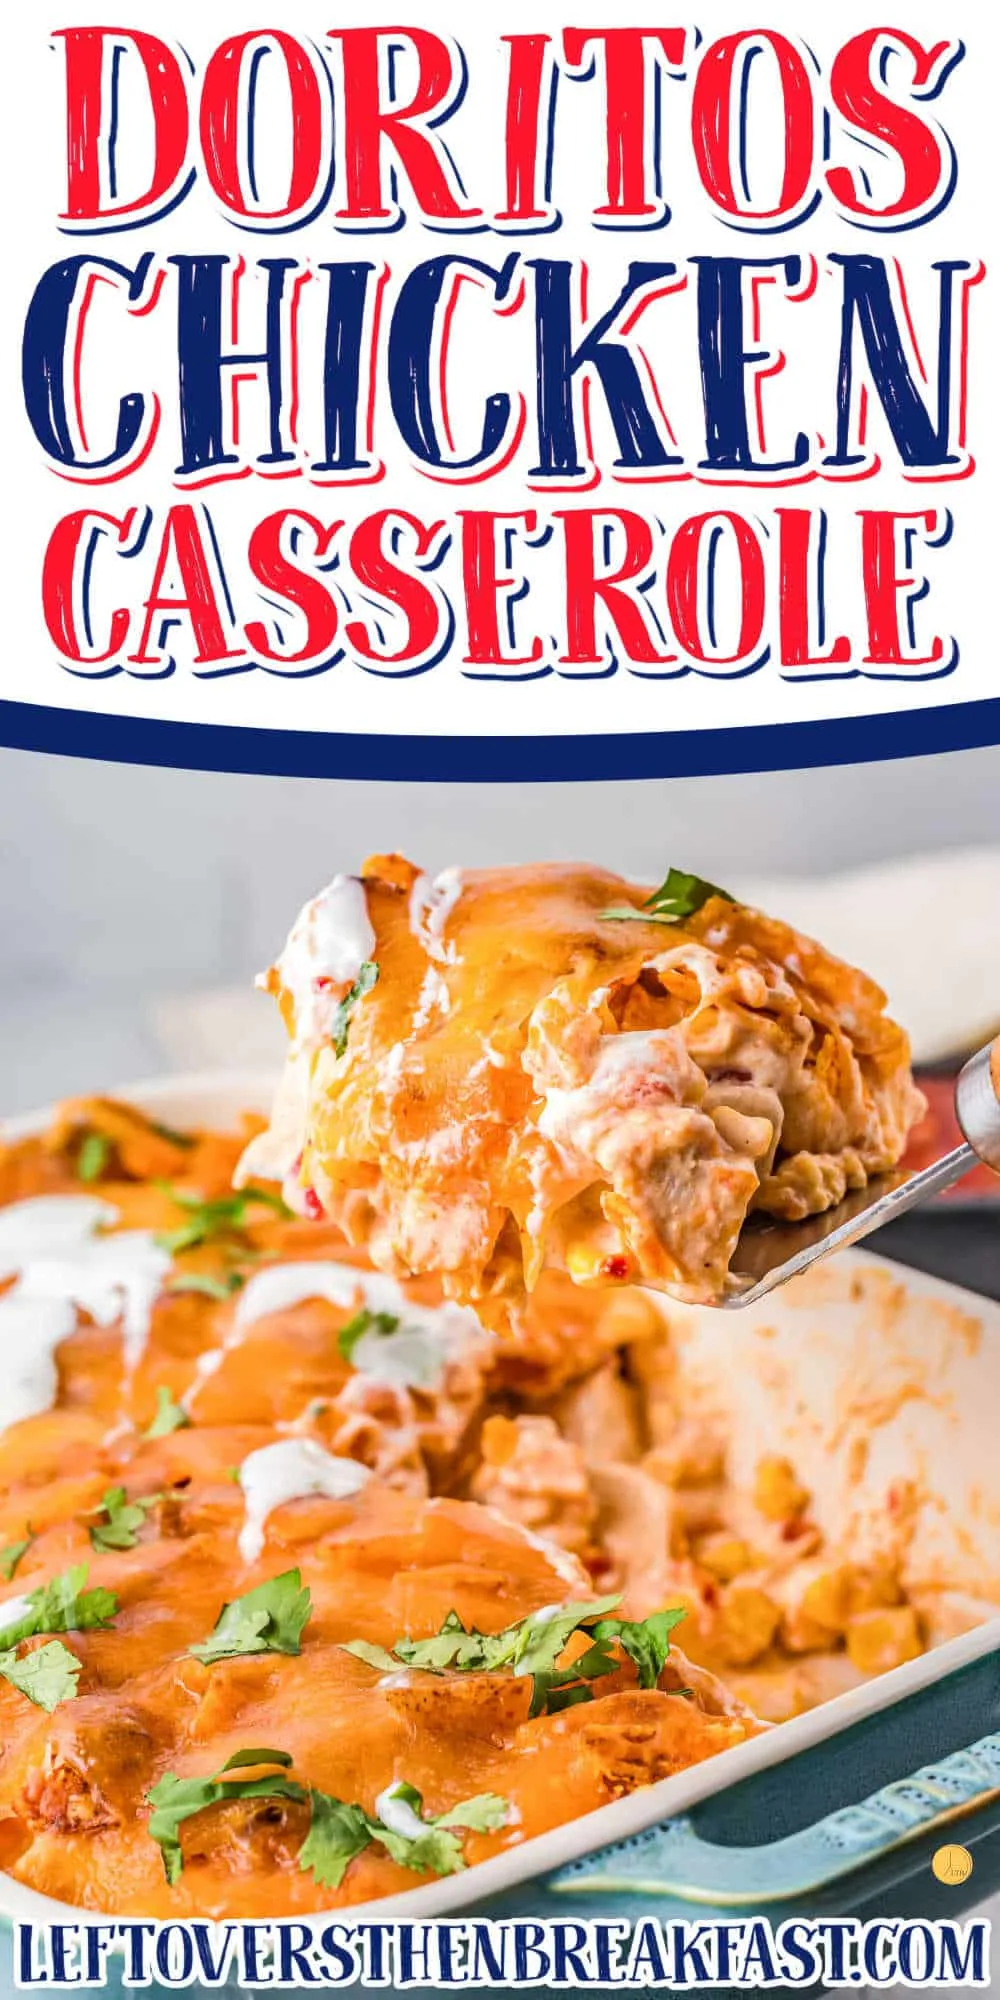 scoop of casserole with text "Doritos Chicken"